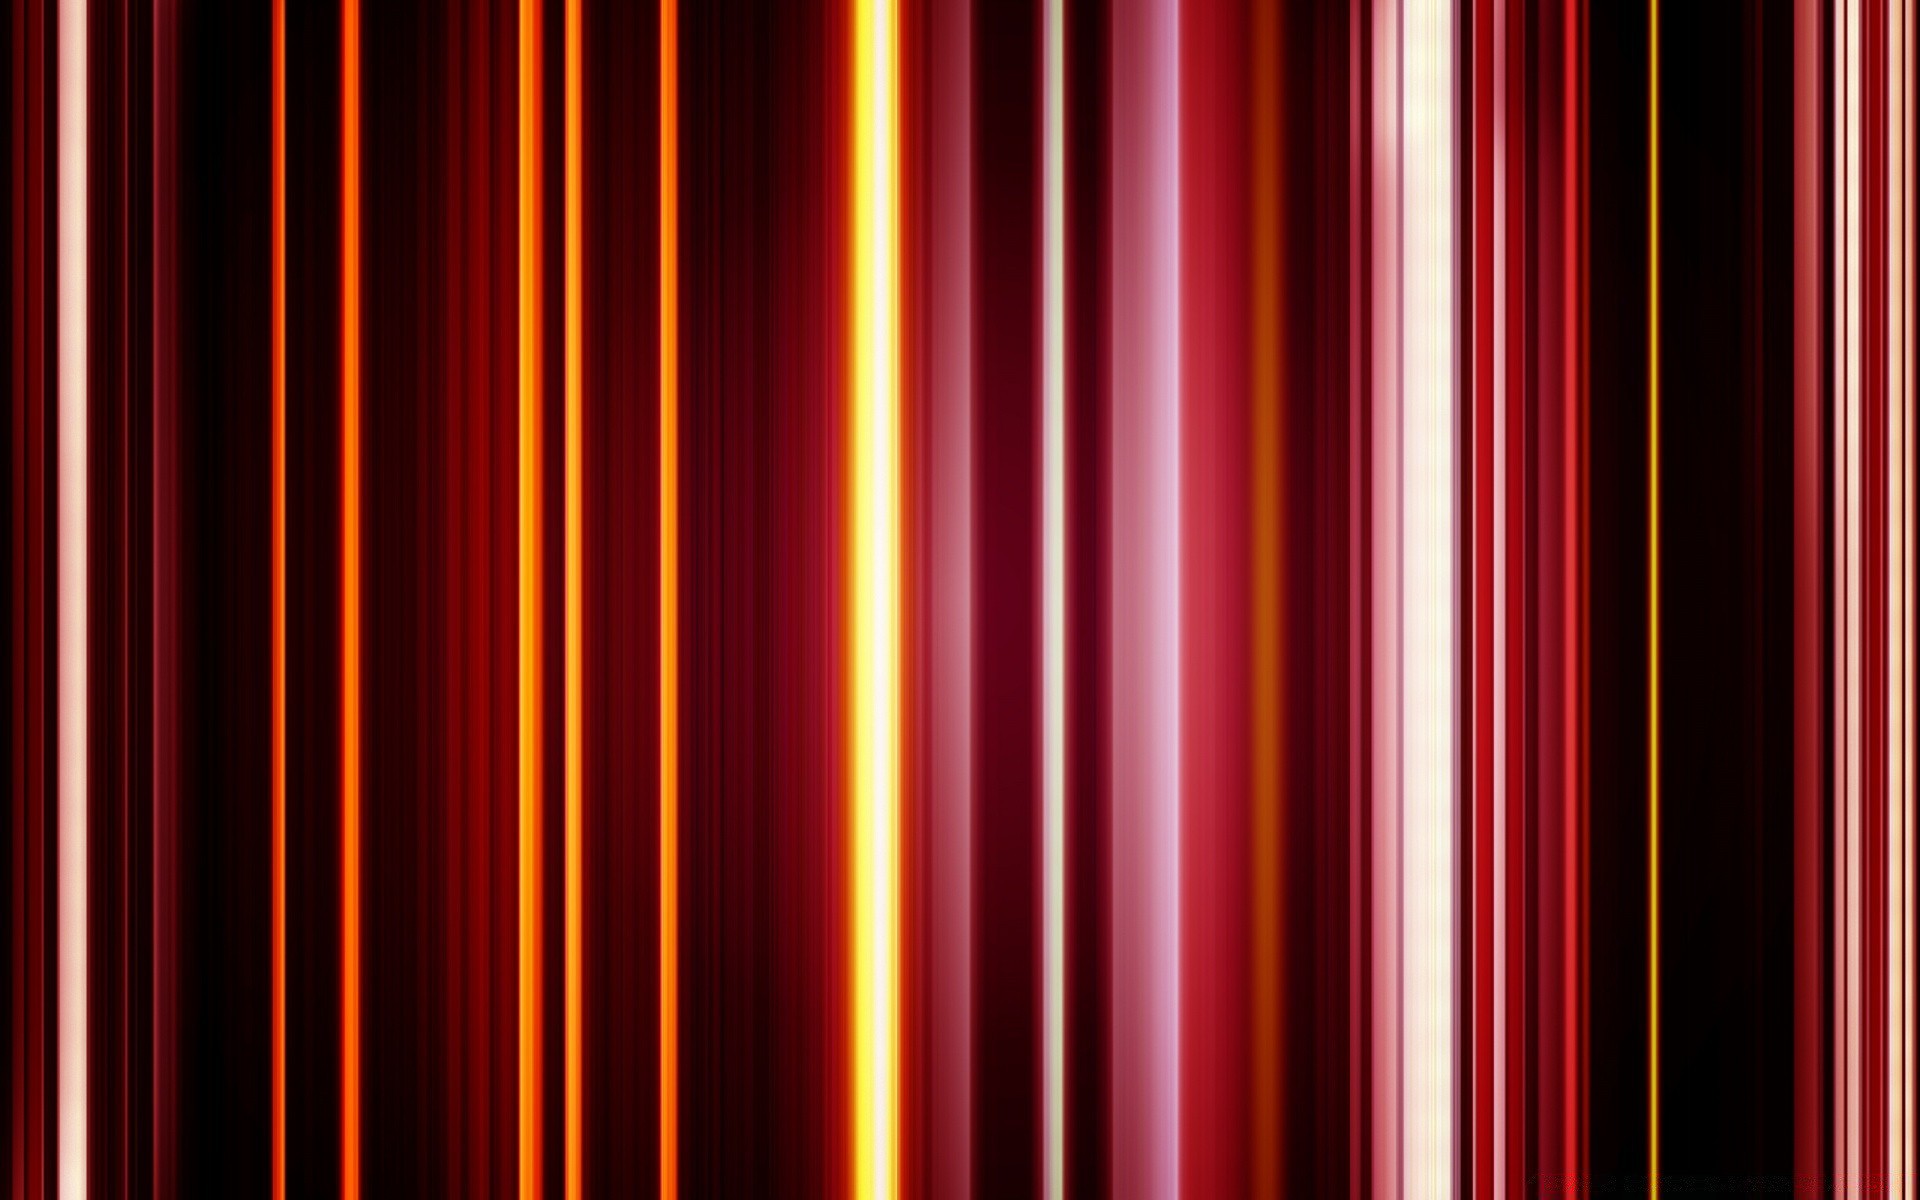 bright colors wallpaper abstract art texture design background stripe pattern illustration decoration graphic desktop graphic design artistic bright curtain retro